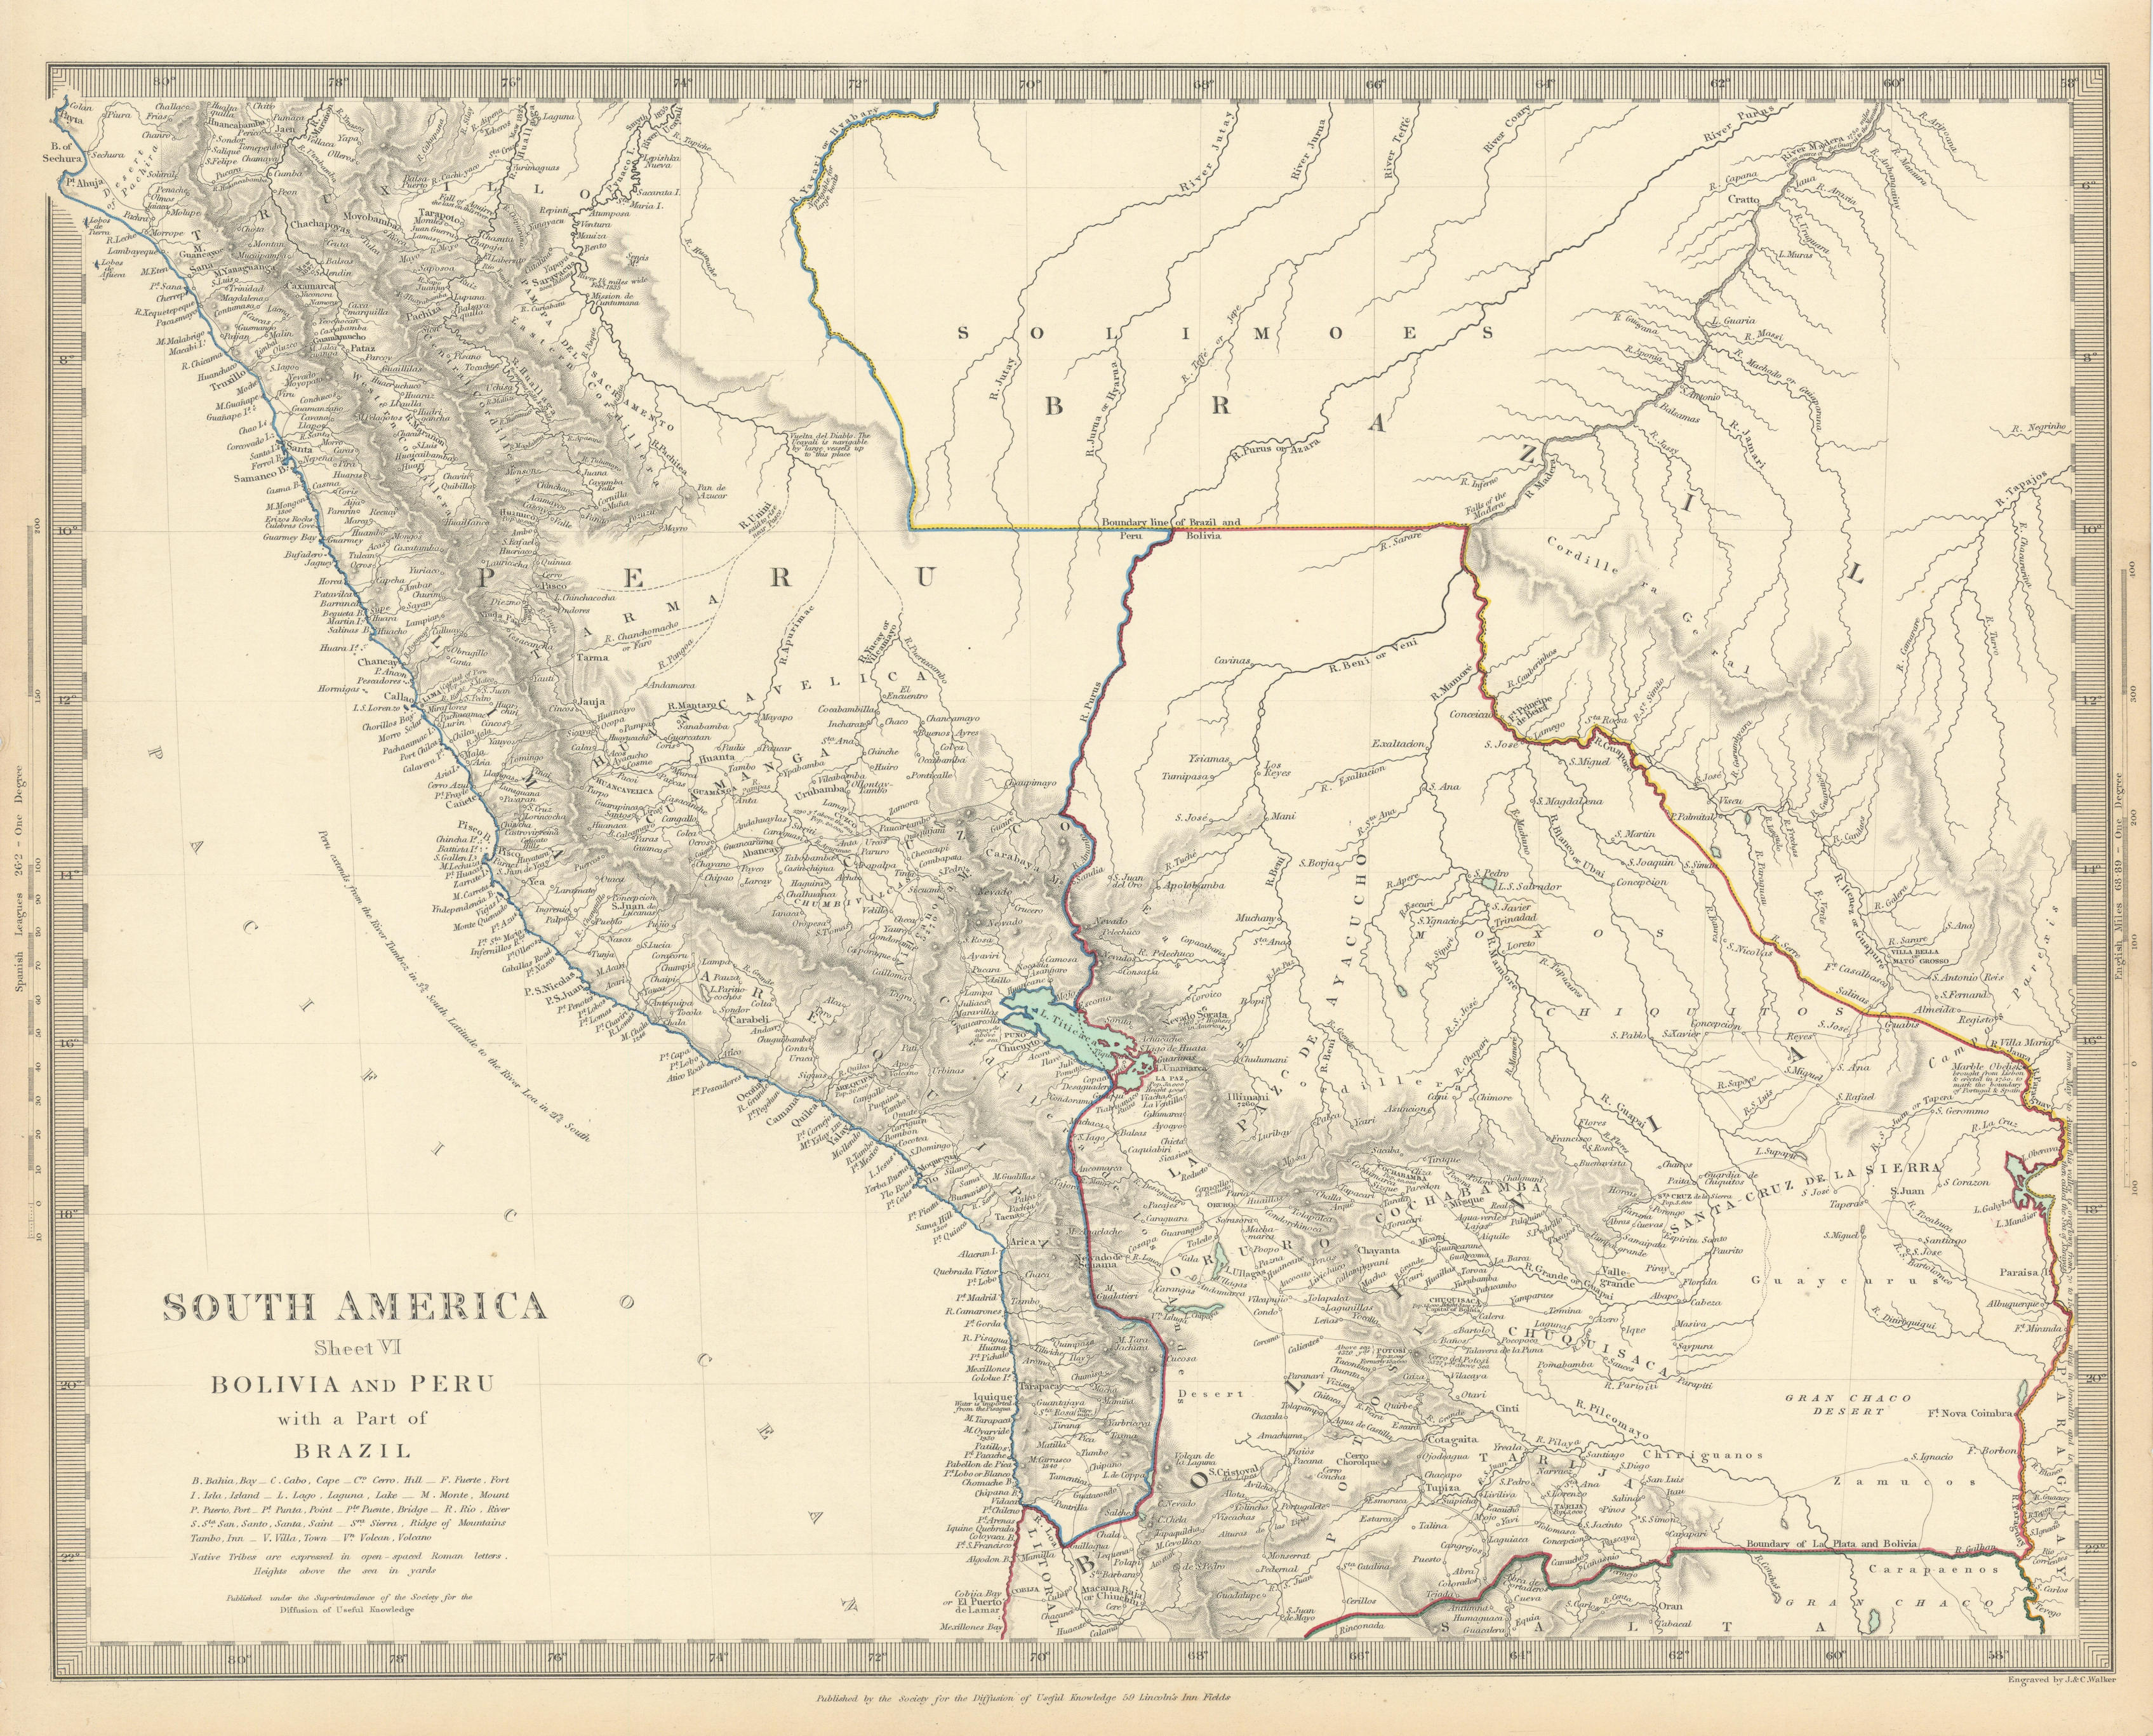 BOLIVIA, PERU & part of Brazil. Indian tribes. Bolivian Litoral. SDUK 1844 map